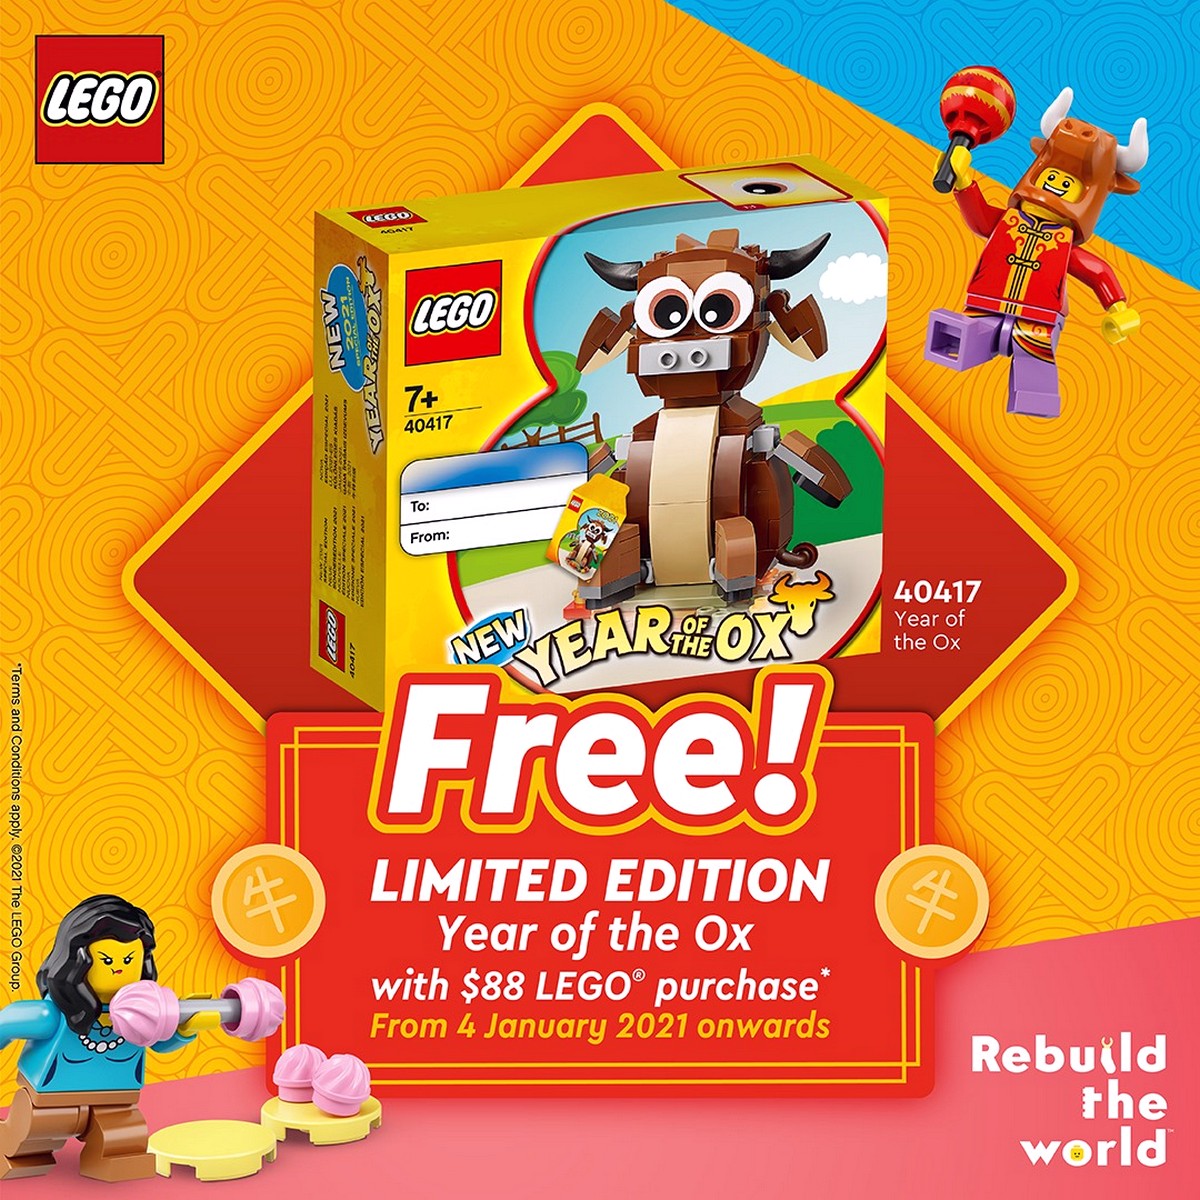 Lego-OX-brand 12-28 Feb 2021: Bunny Box CNY Promotion Sale Up to 40% OFF LEGO, Nerf, Play-Doh, Transformers, Paw Patrol, Bakugan, Hatchimals, Monster Jam, My Little Pony, Twisty Petz, Kinetic Sand & More